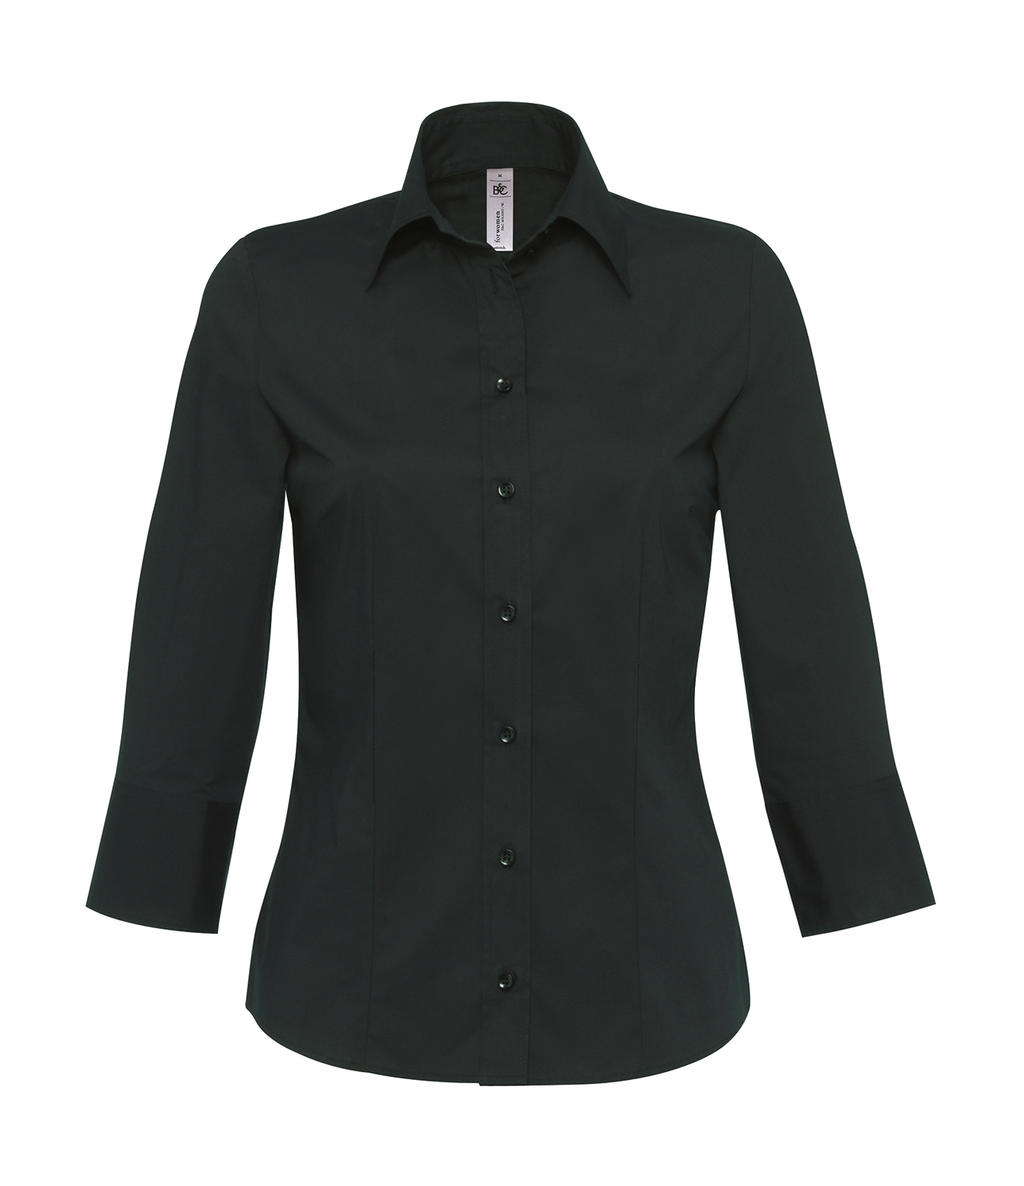  Milano/women Popelin Shirt 3/4 sleeves in Farbe Black